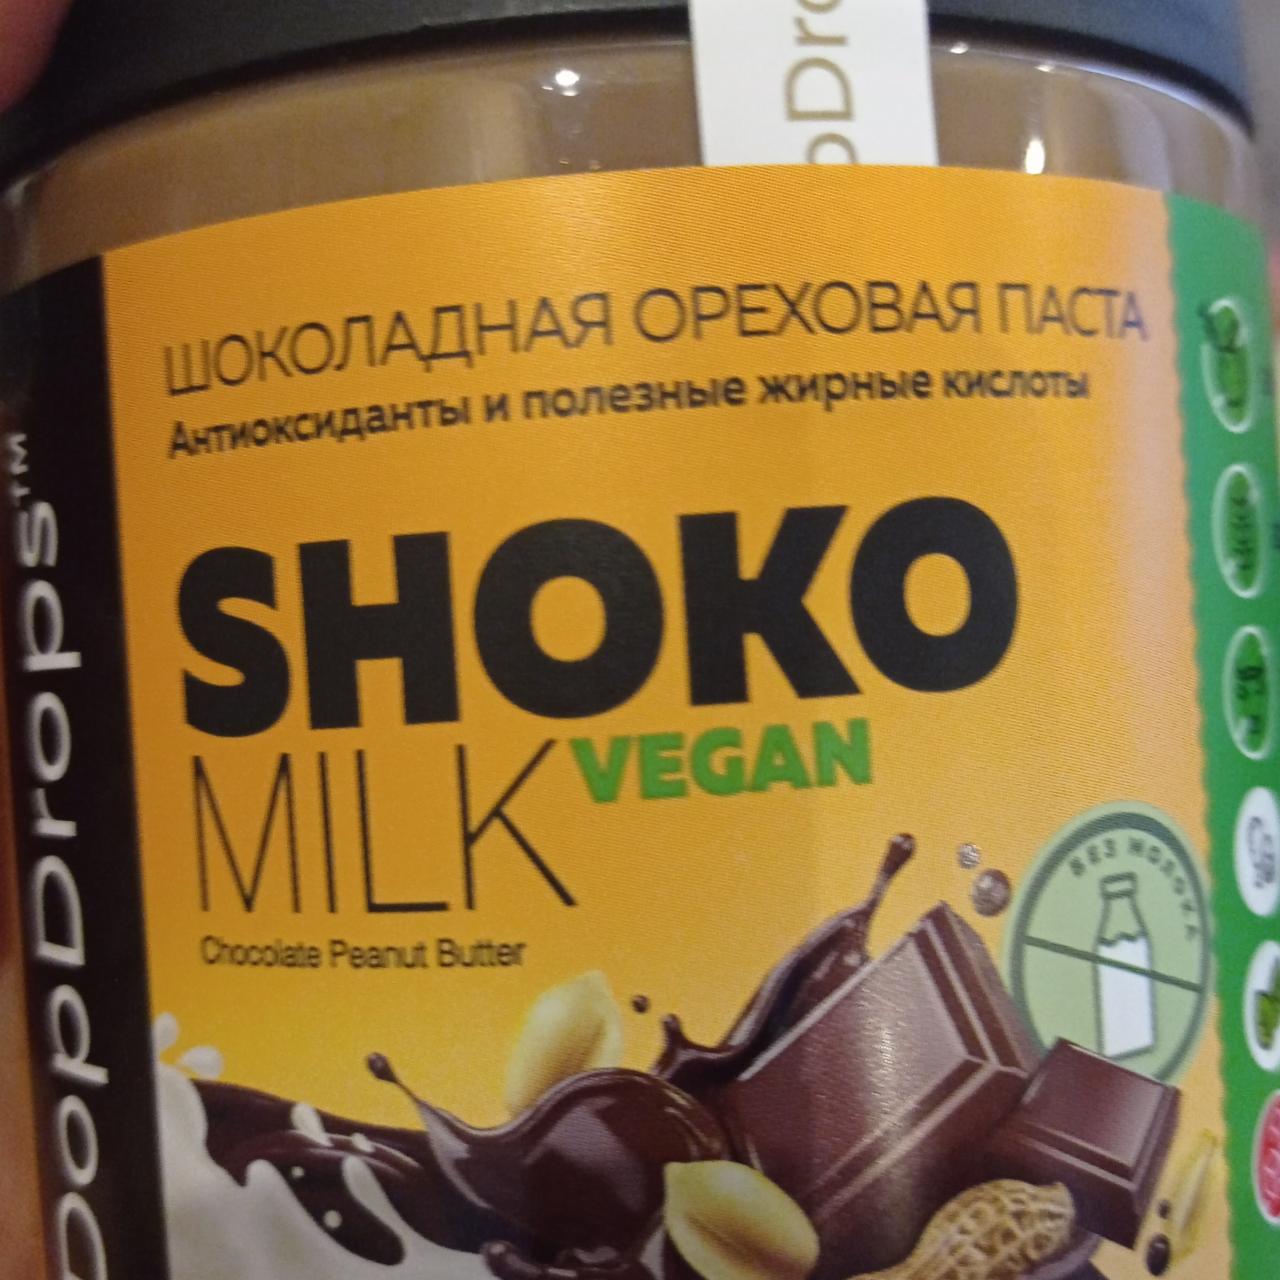 Фото - Шоколадно ореховая паста без сахара vegan Shoko milk Dop drops